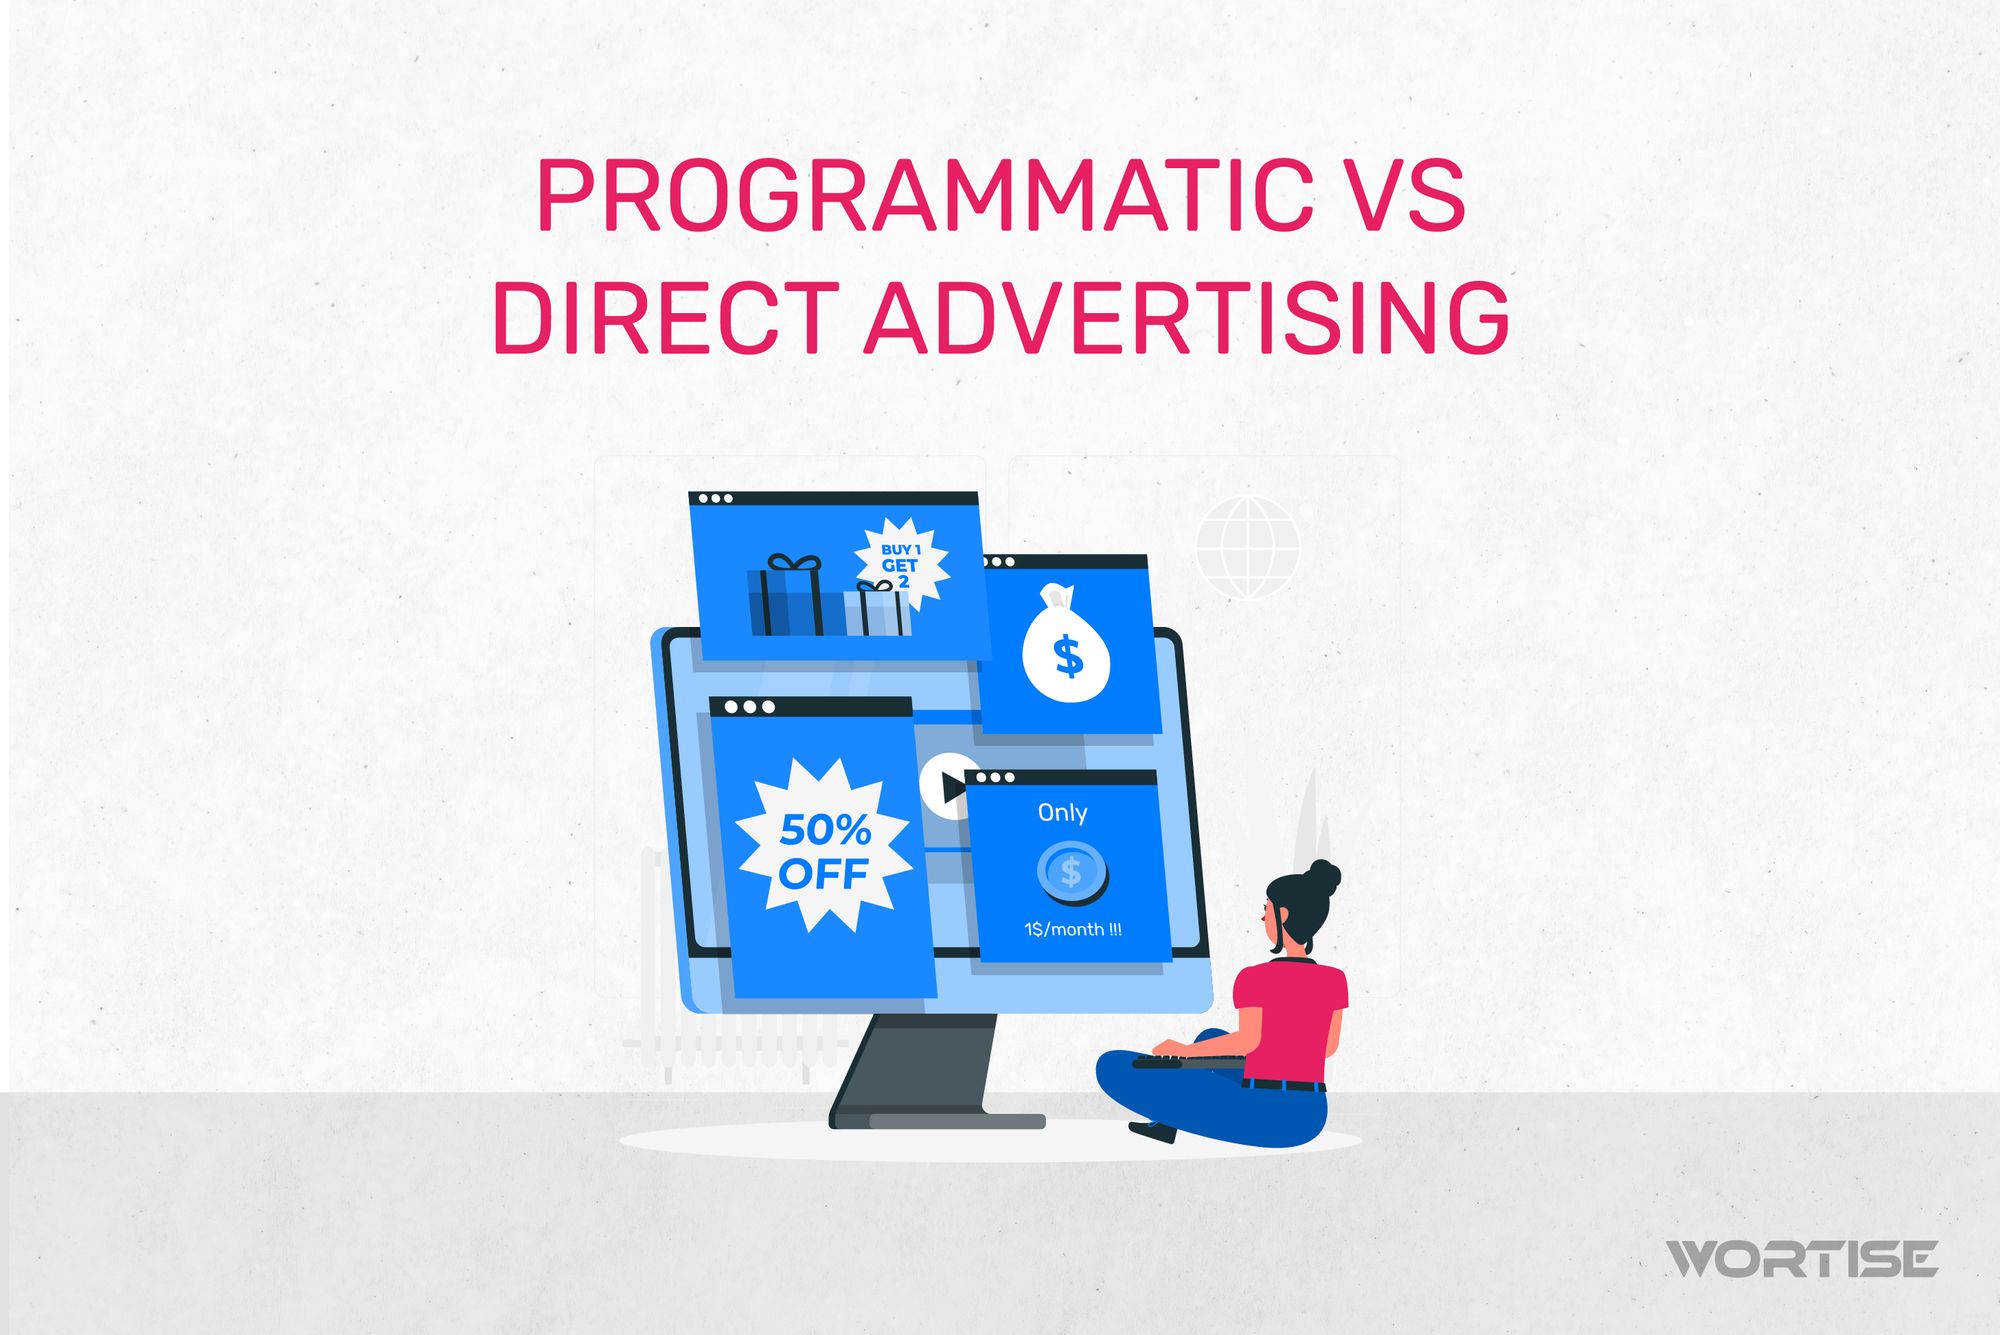 Programmatic vs Direct Advertising: Which Generates More Revenue?